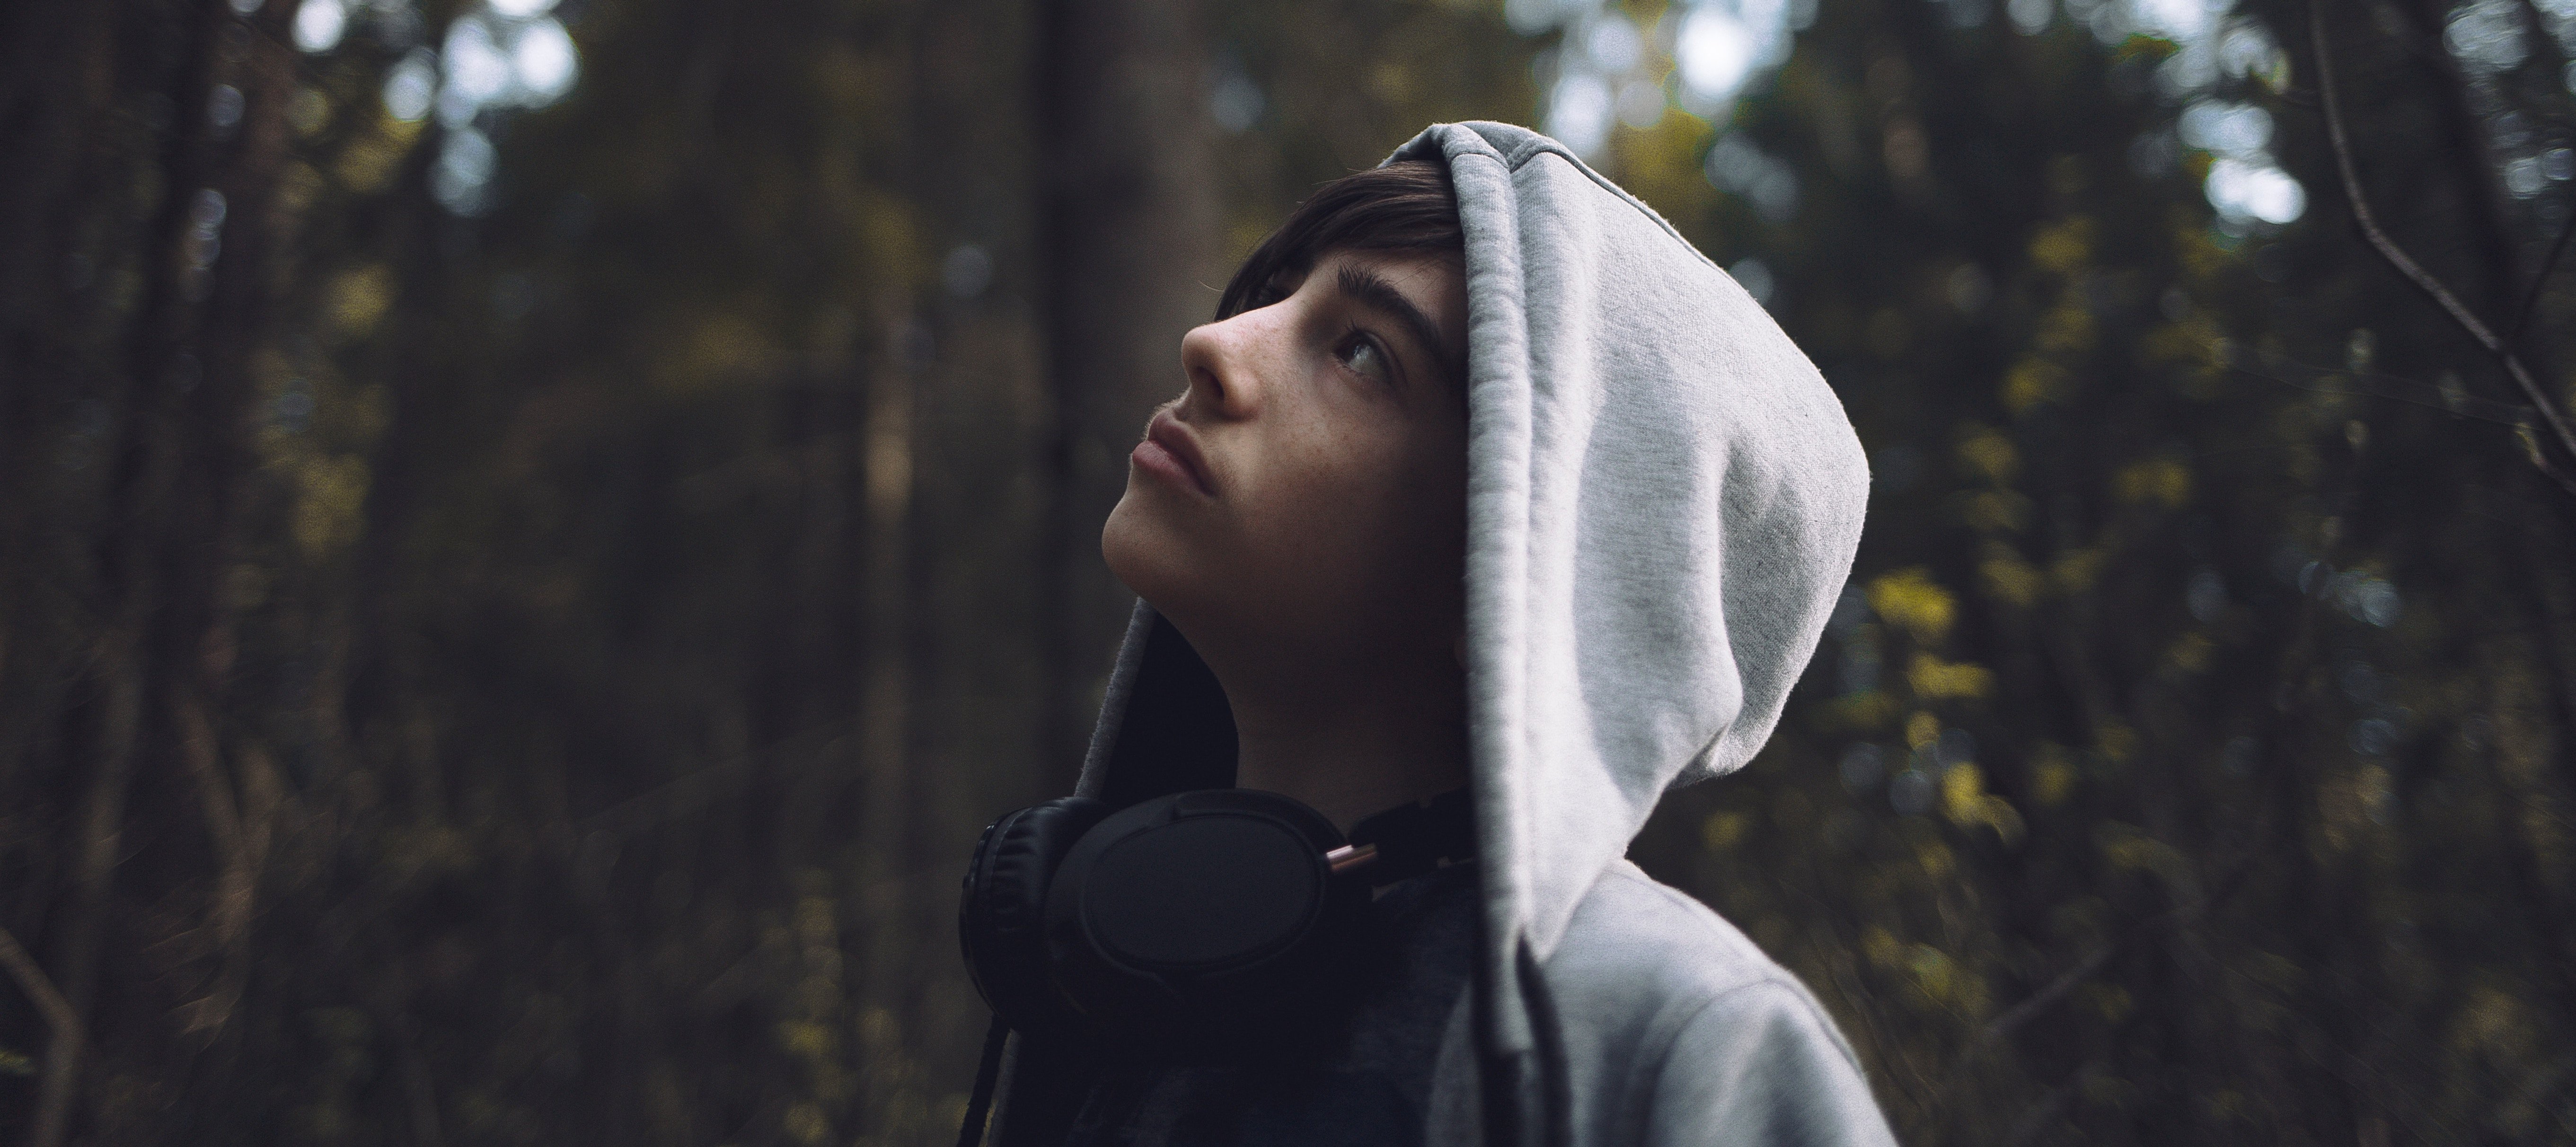 adolescent teenager with headphones looking up